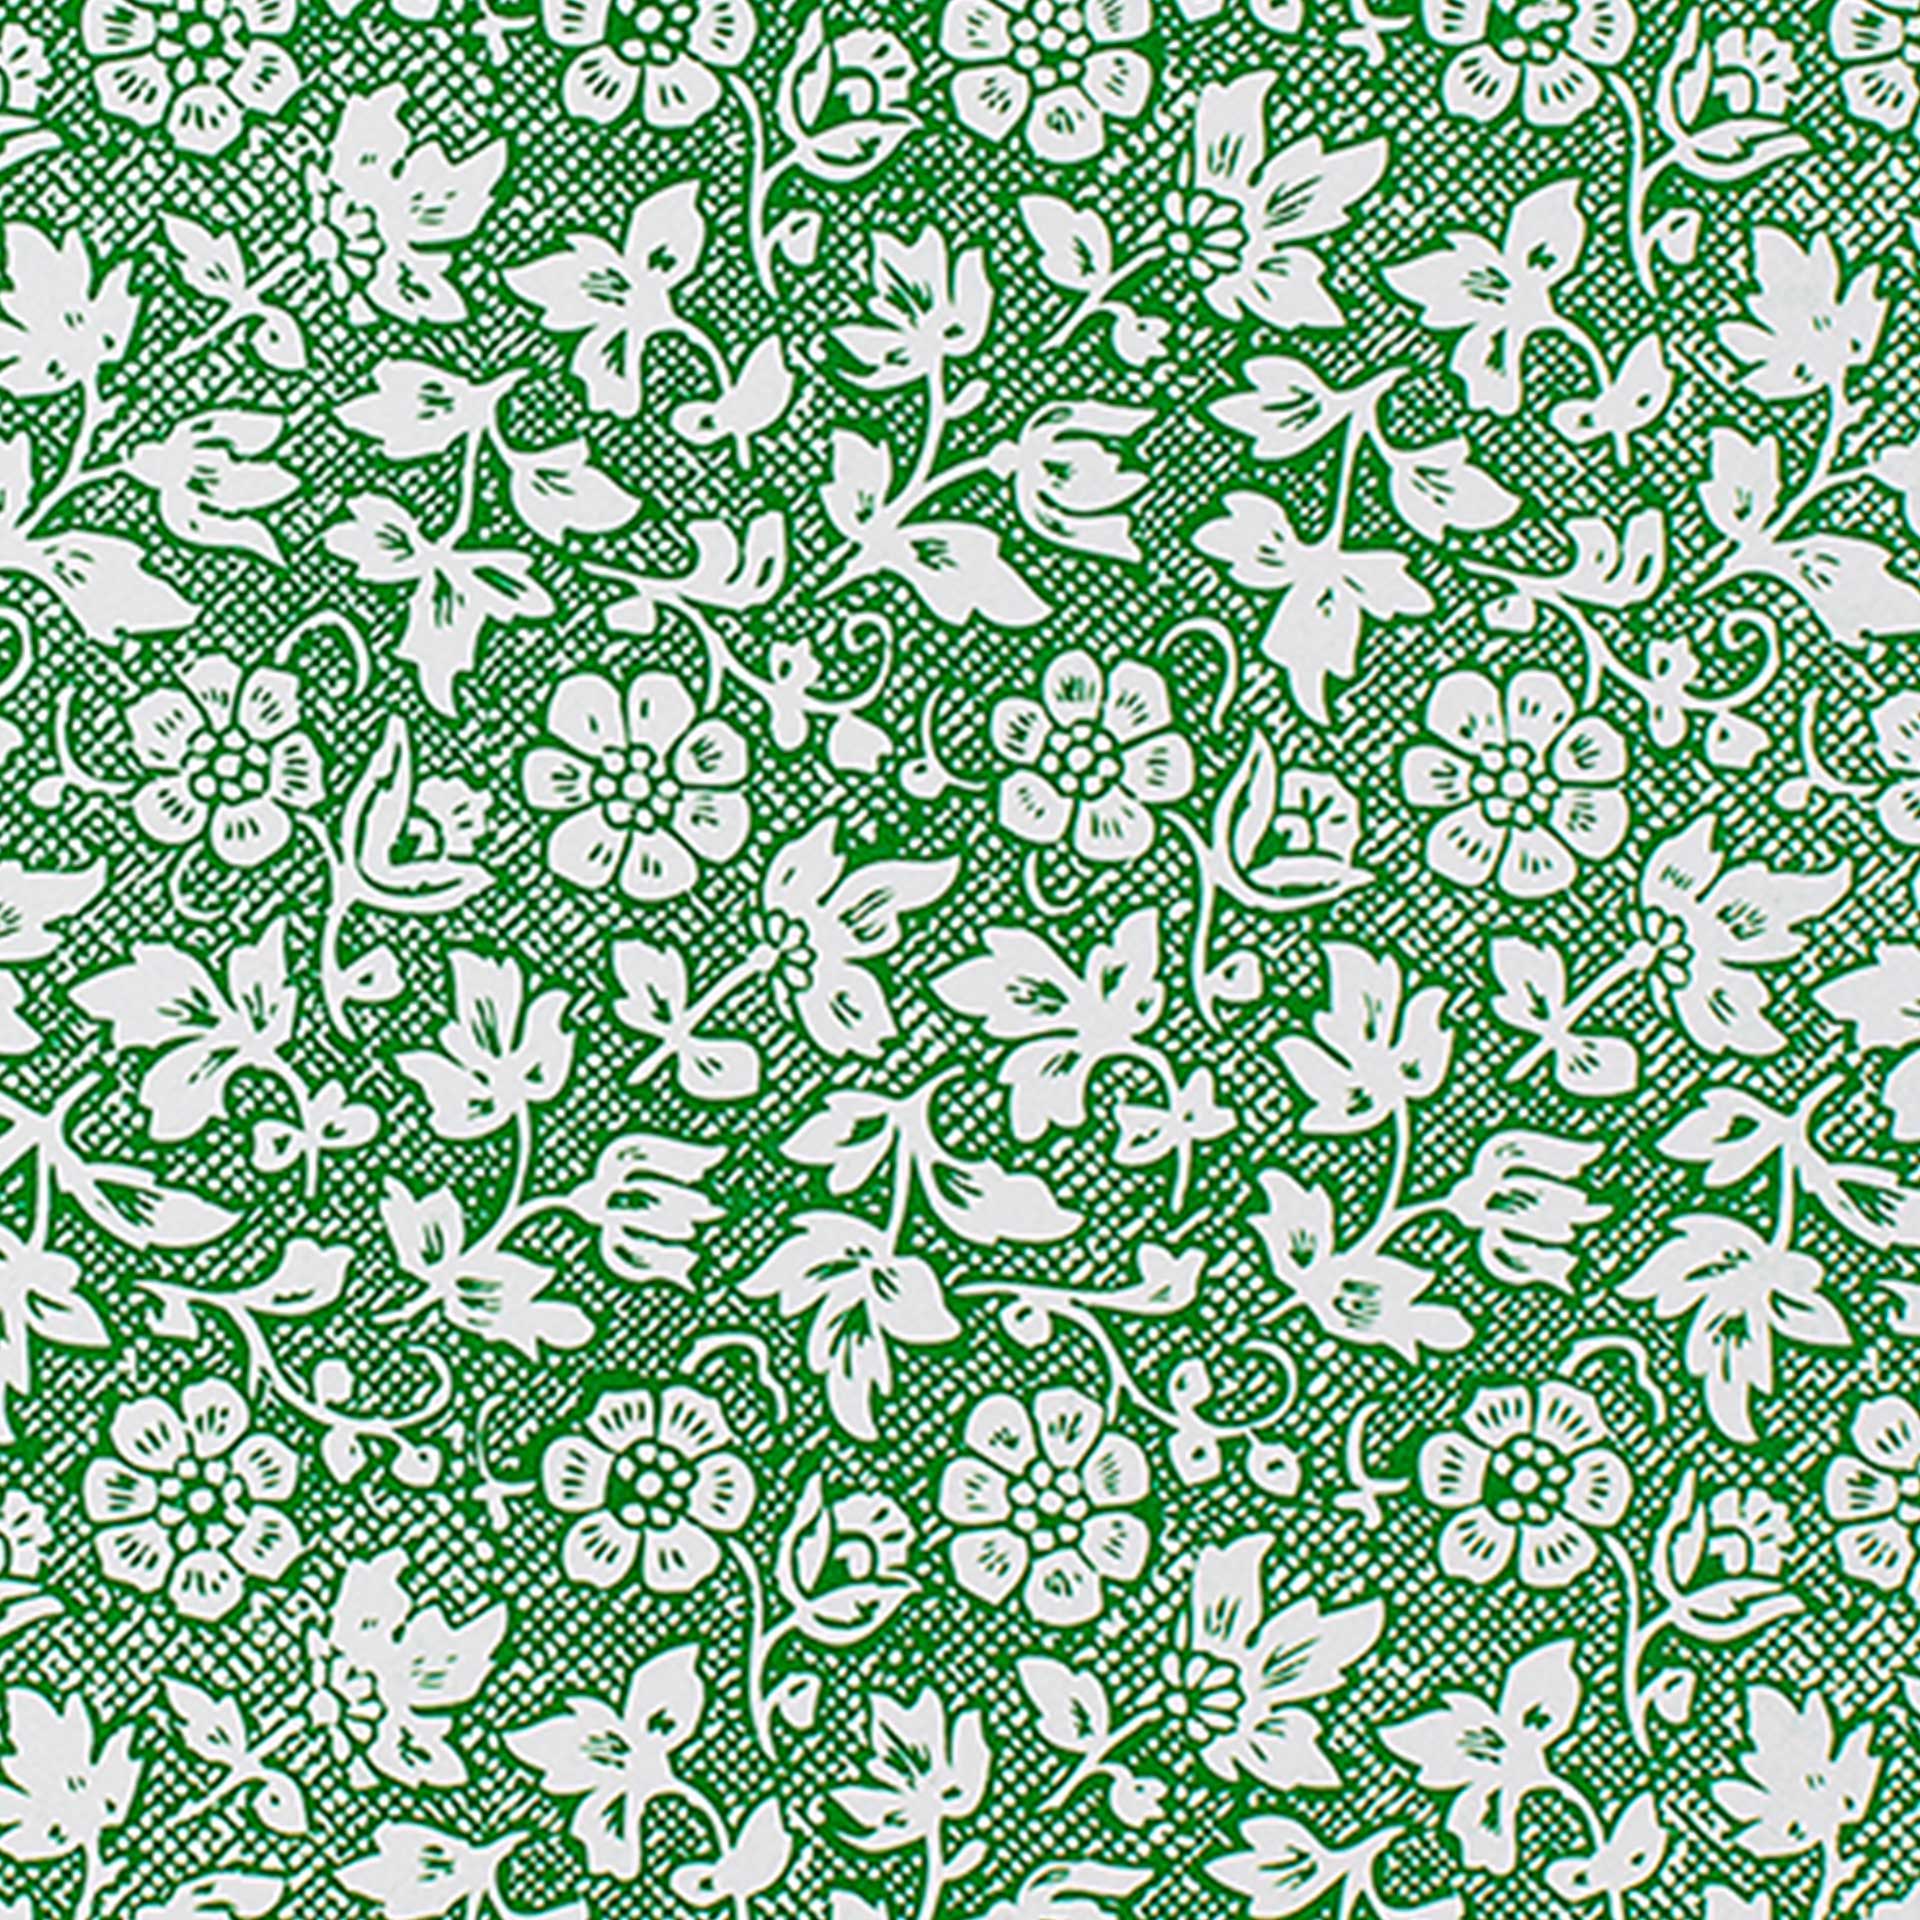 Closeup of printed green flowers